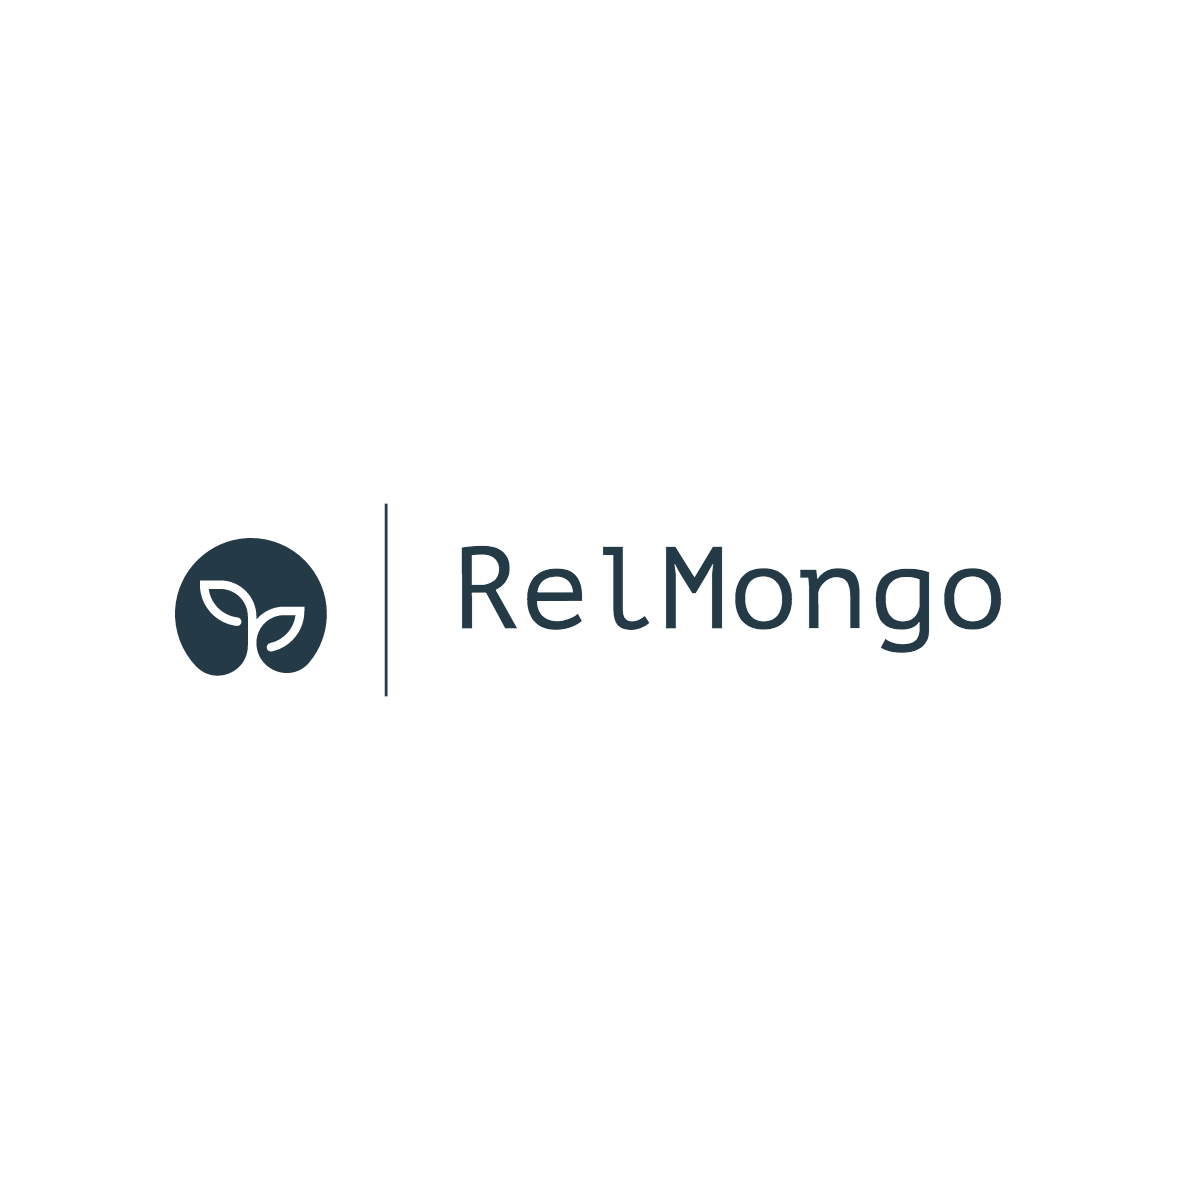 the RelMongo project logo